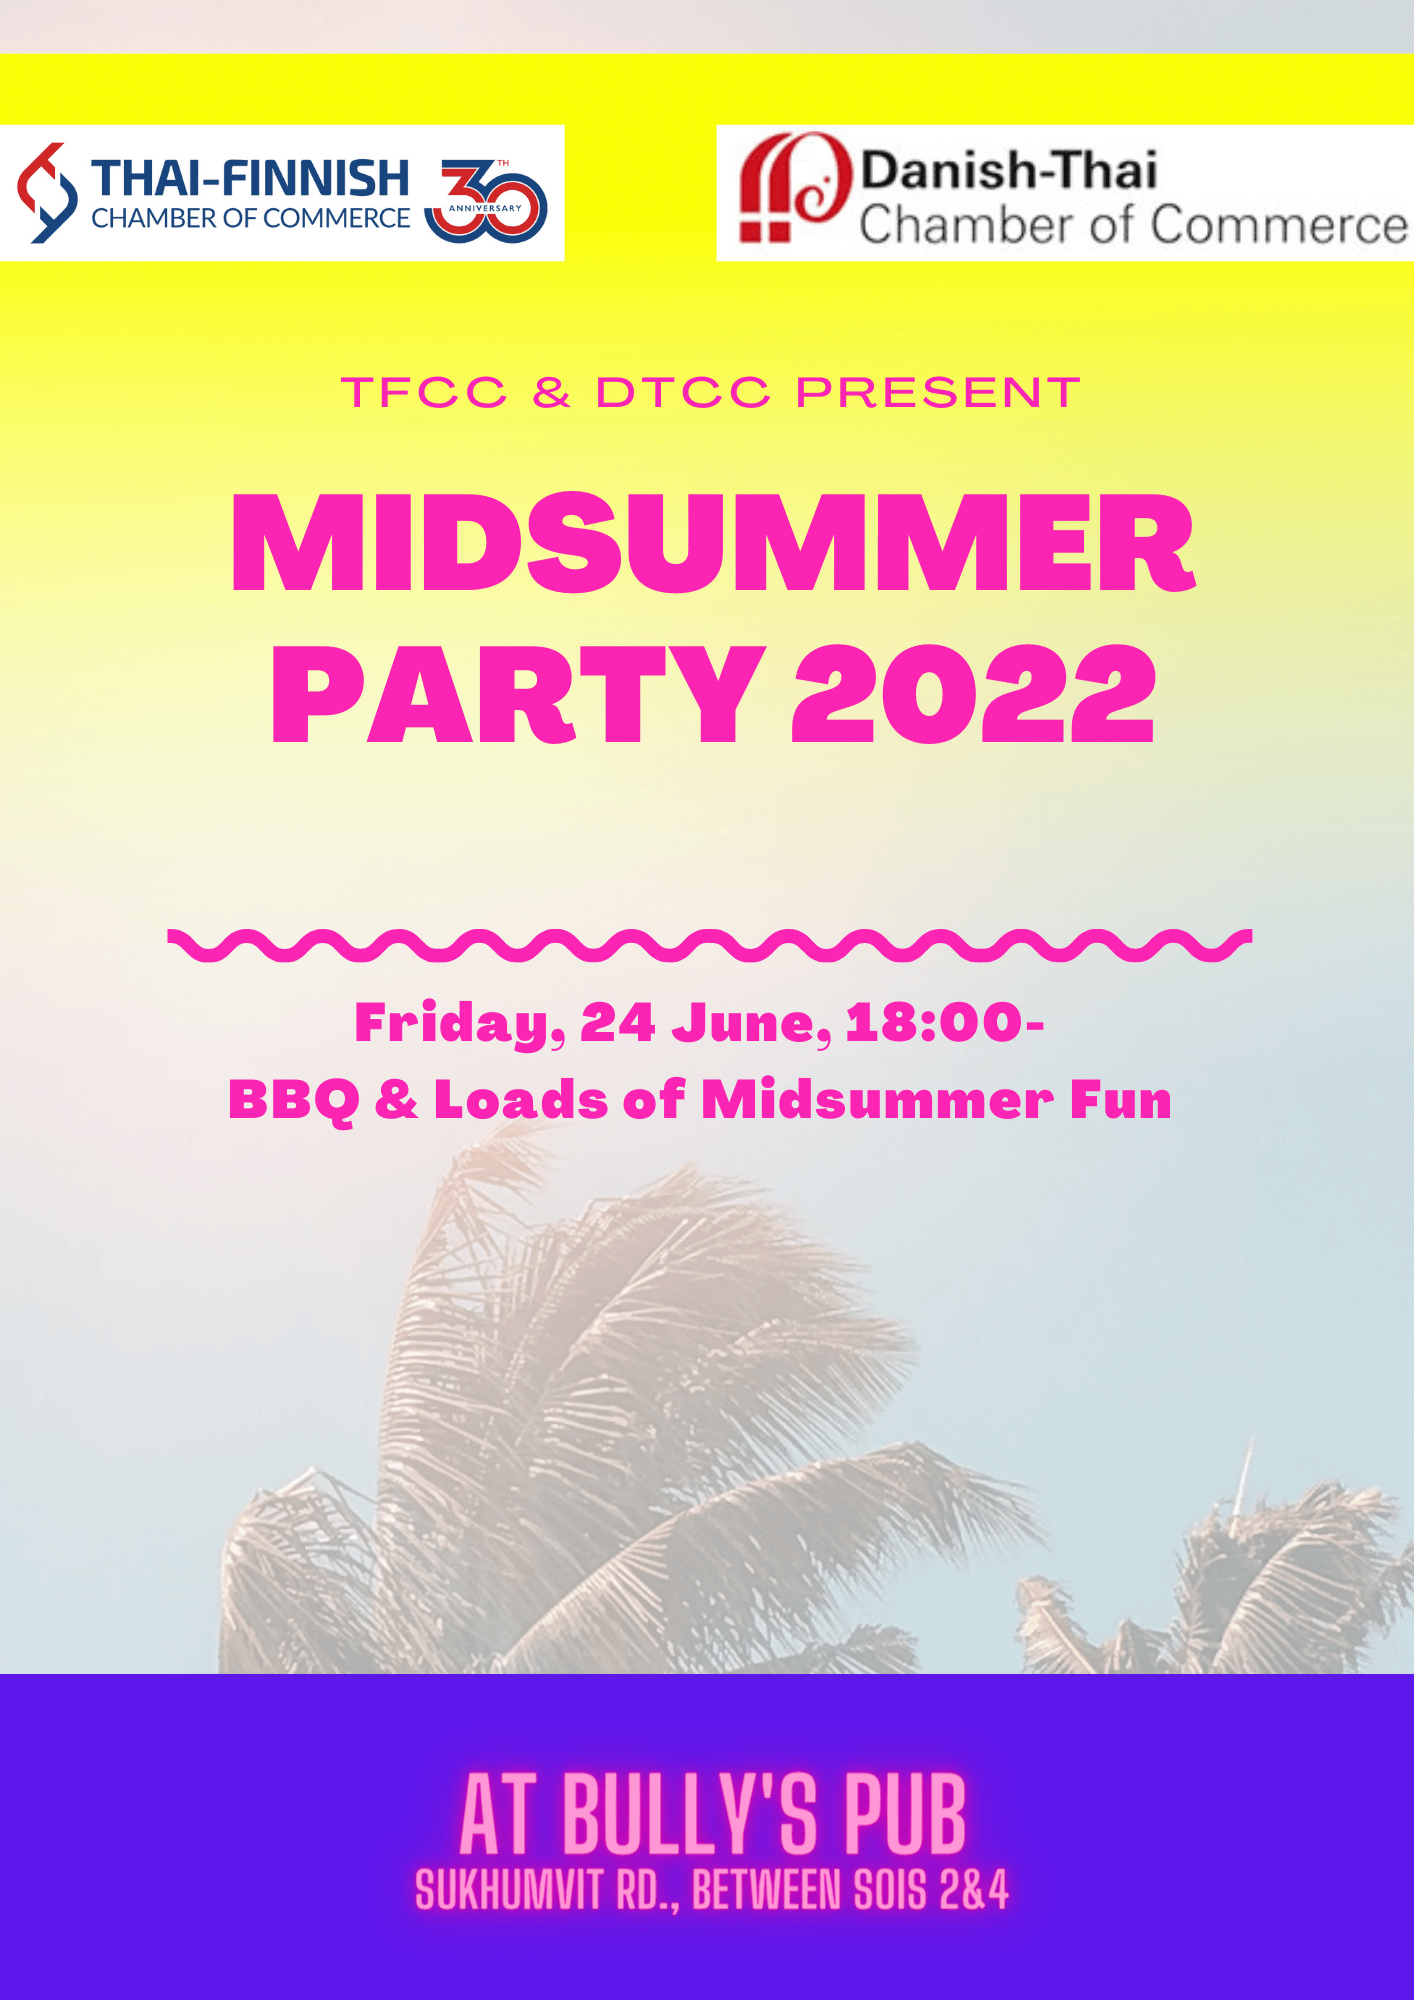 TFCC's & DTCC's Midsummer Party